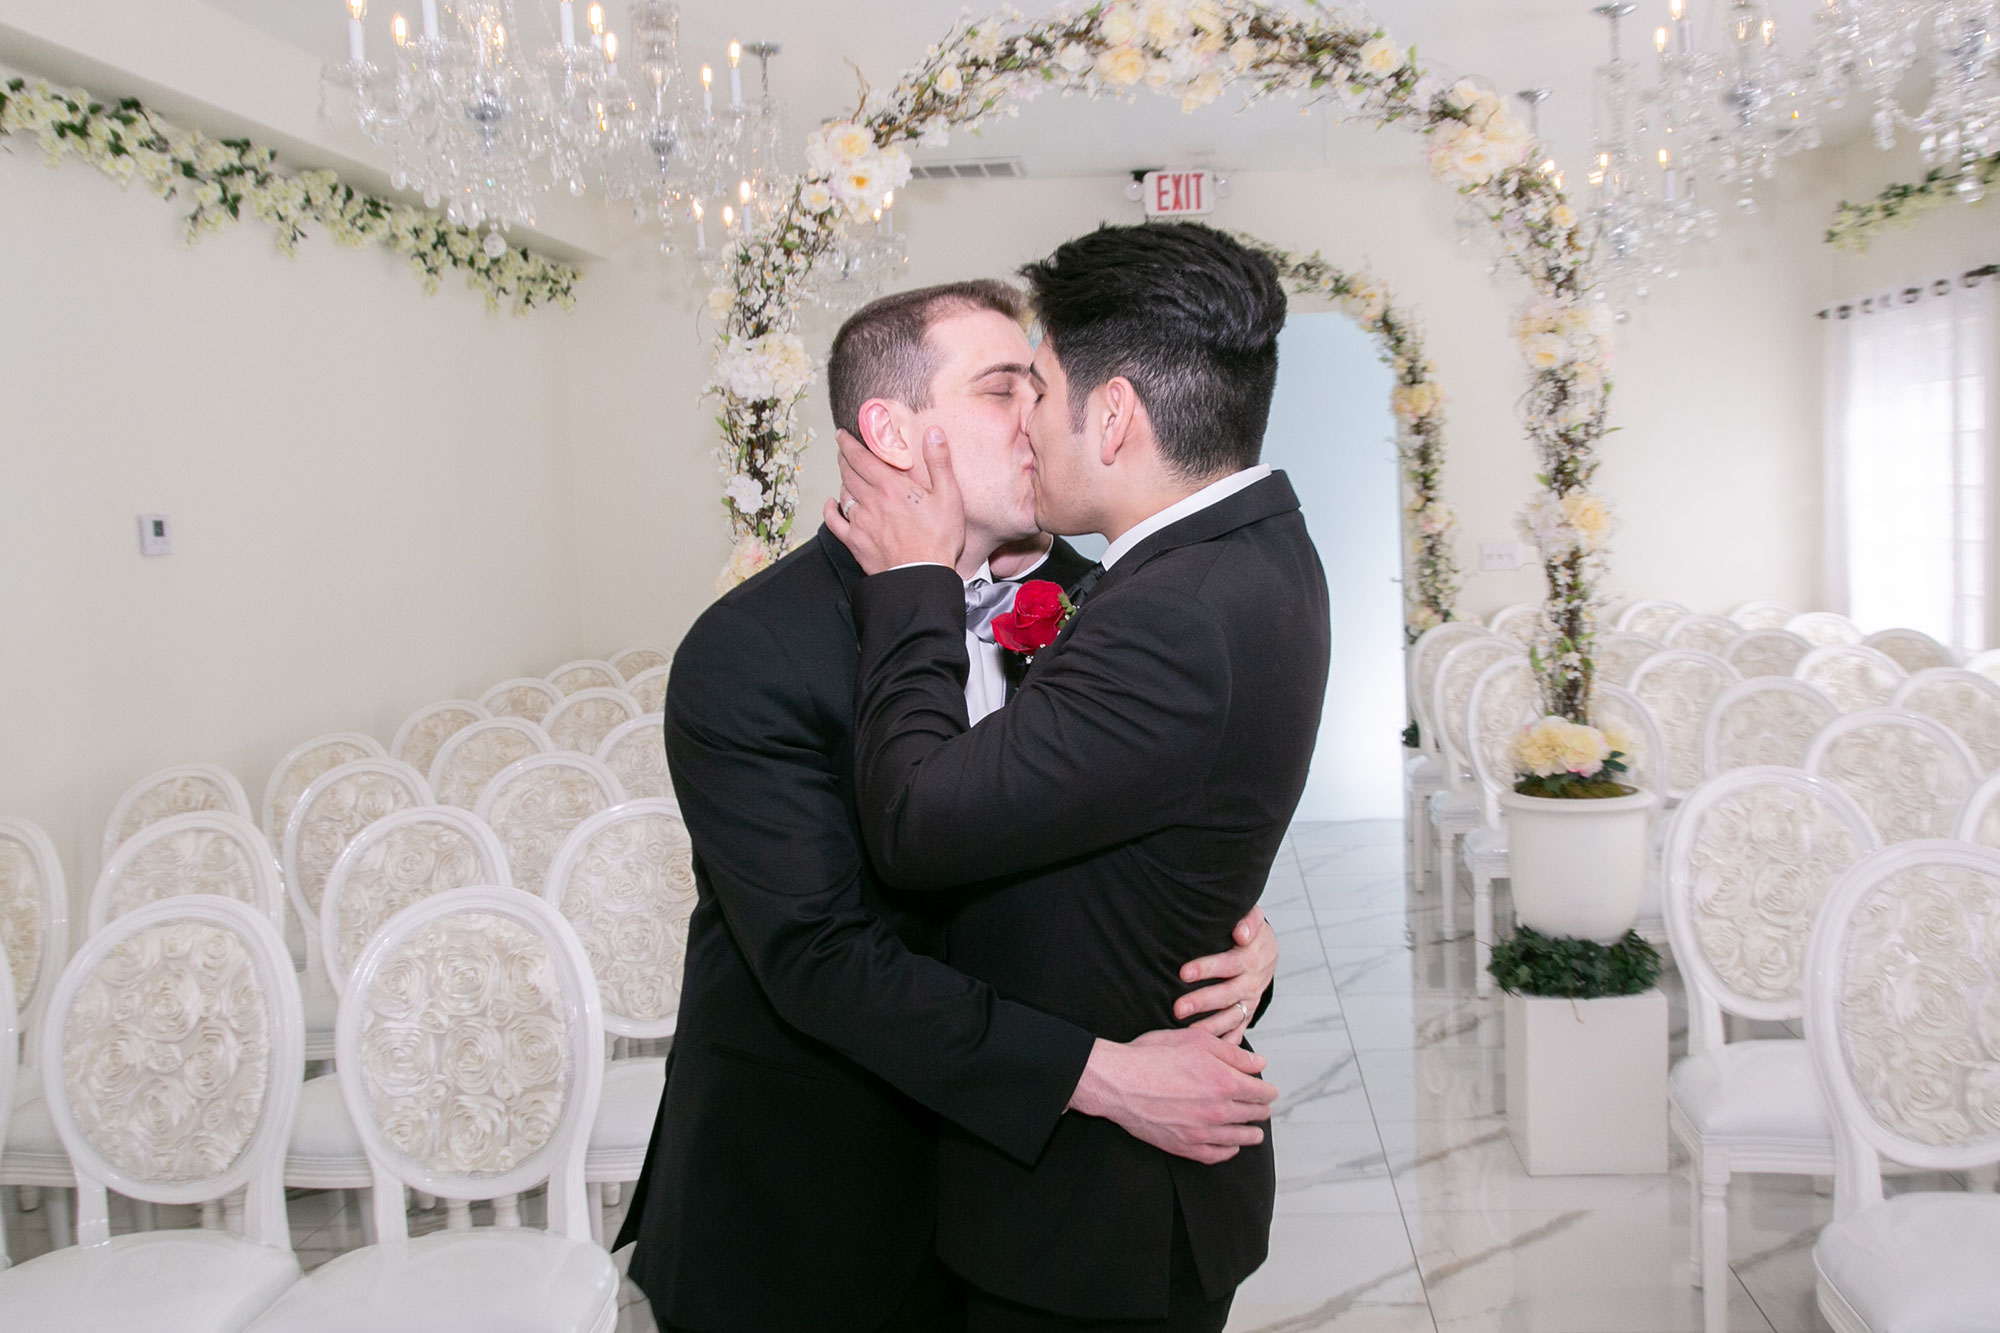 We Are the Top LGBT Wedding Chapel in Las Vegas